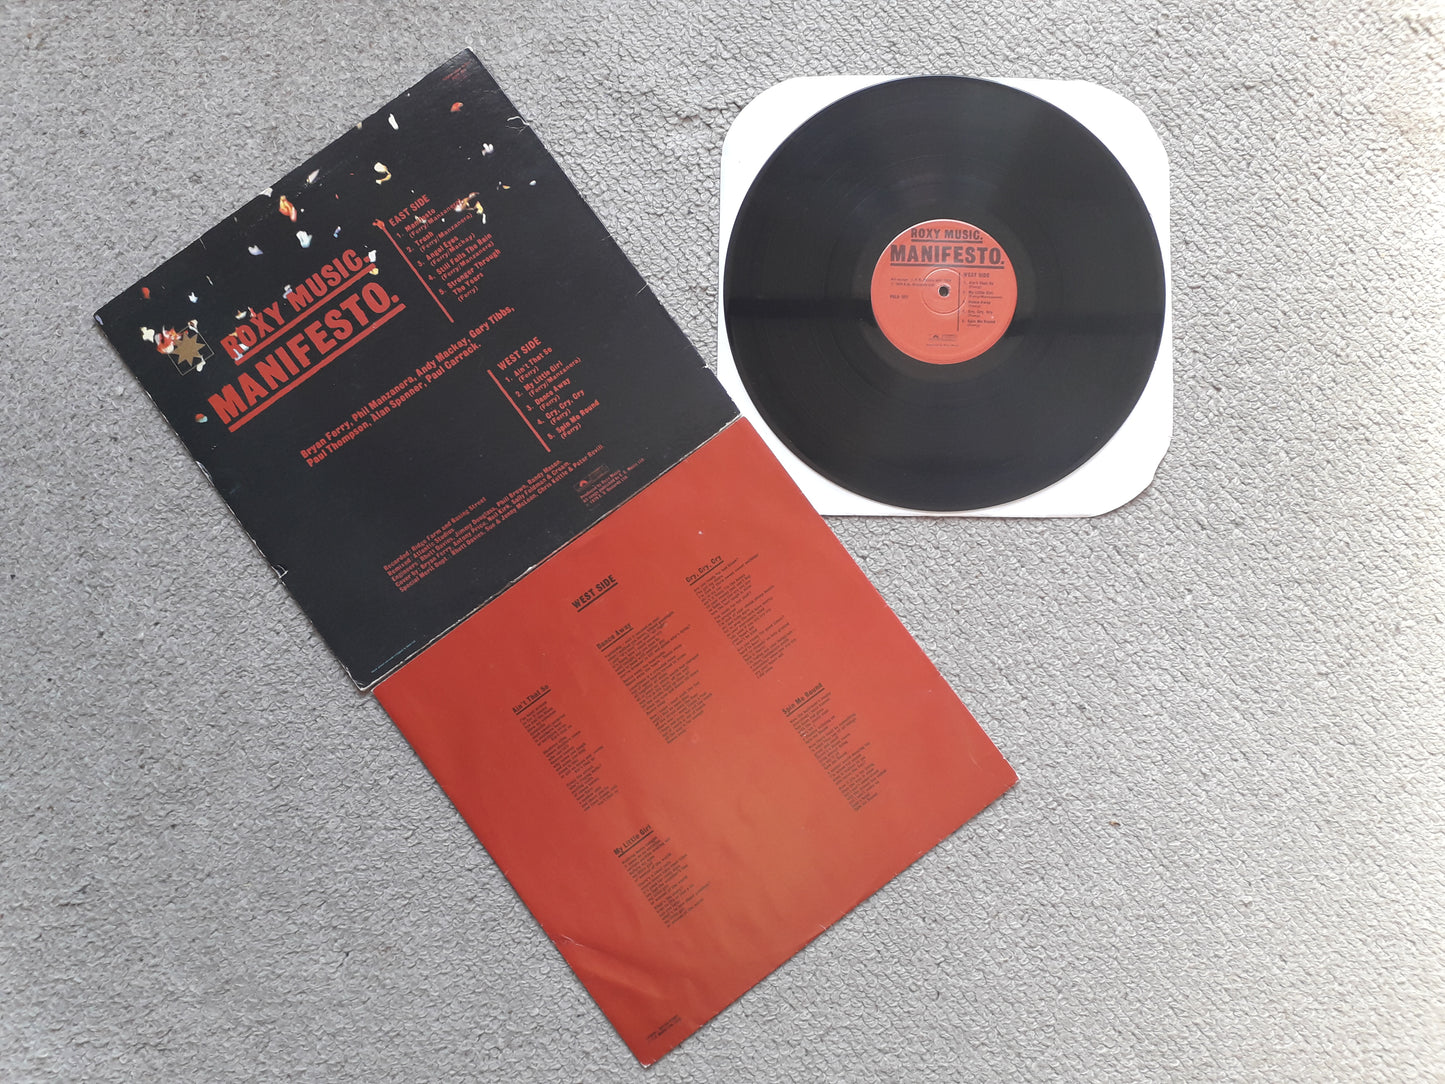 Roxy Music-Manifesto LP (POLH 001)